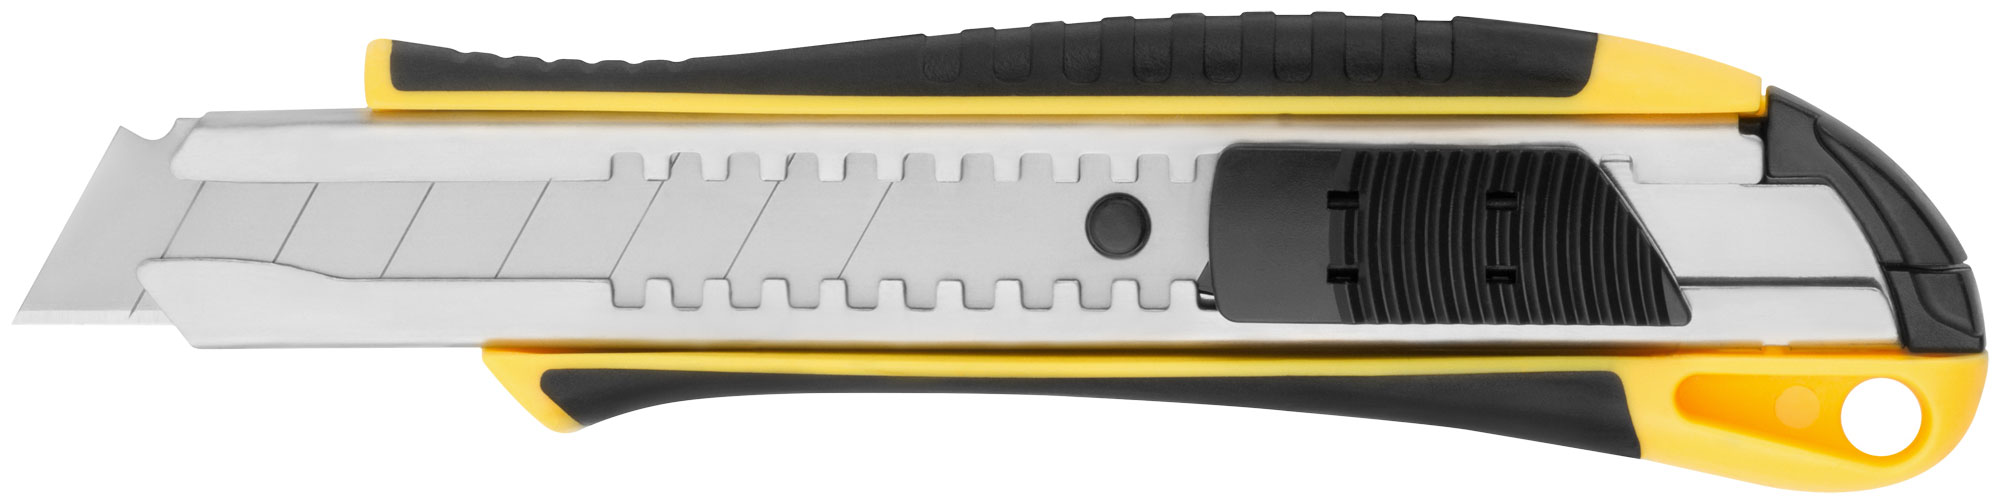 FIT IT  Нож технический 18 мм усиленный прорезиненный, 2-х сторонняя автофиксация нож технический курс крафт 10185 25 мм усиленный прорезиненный